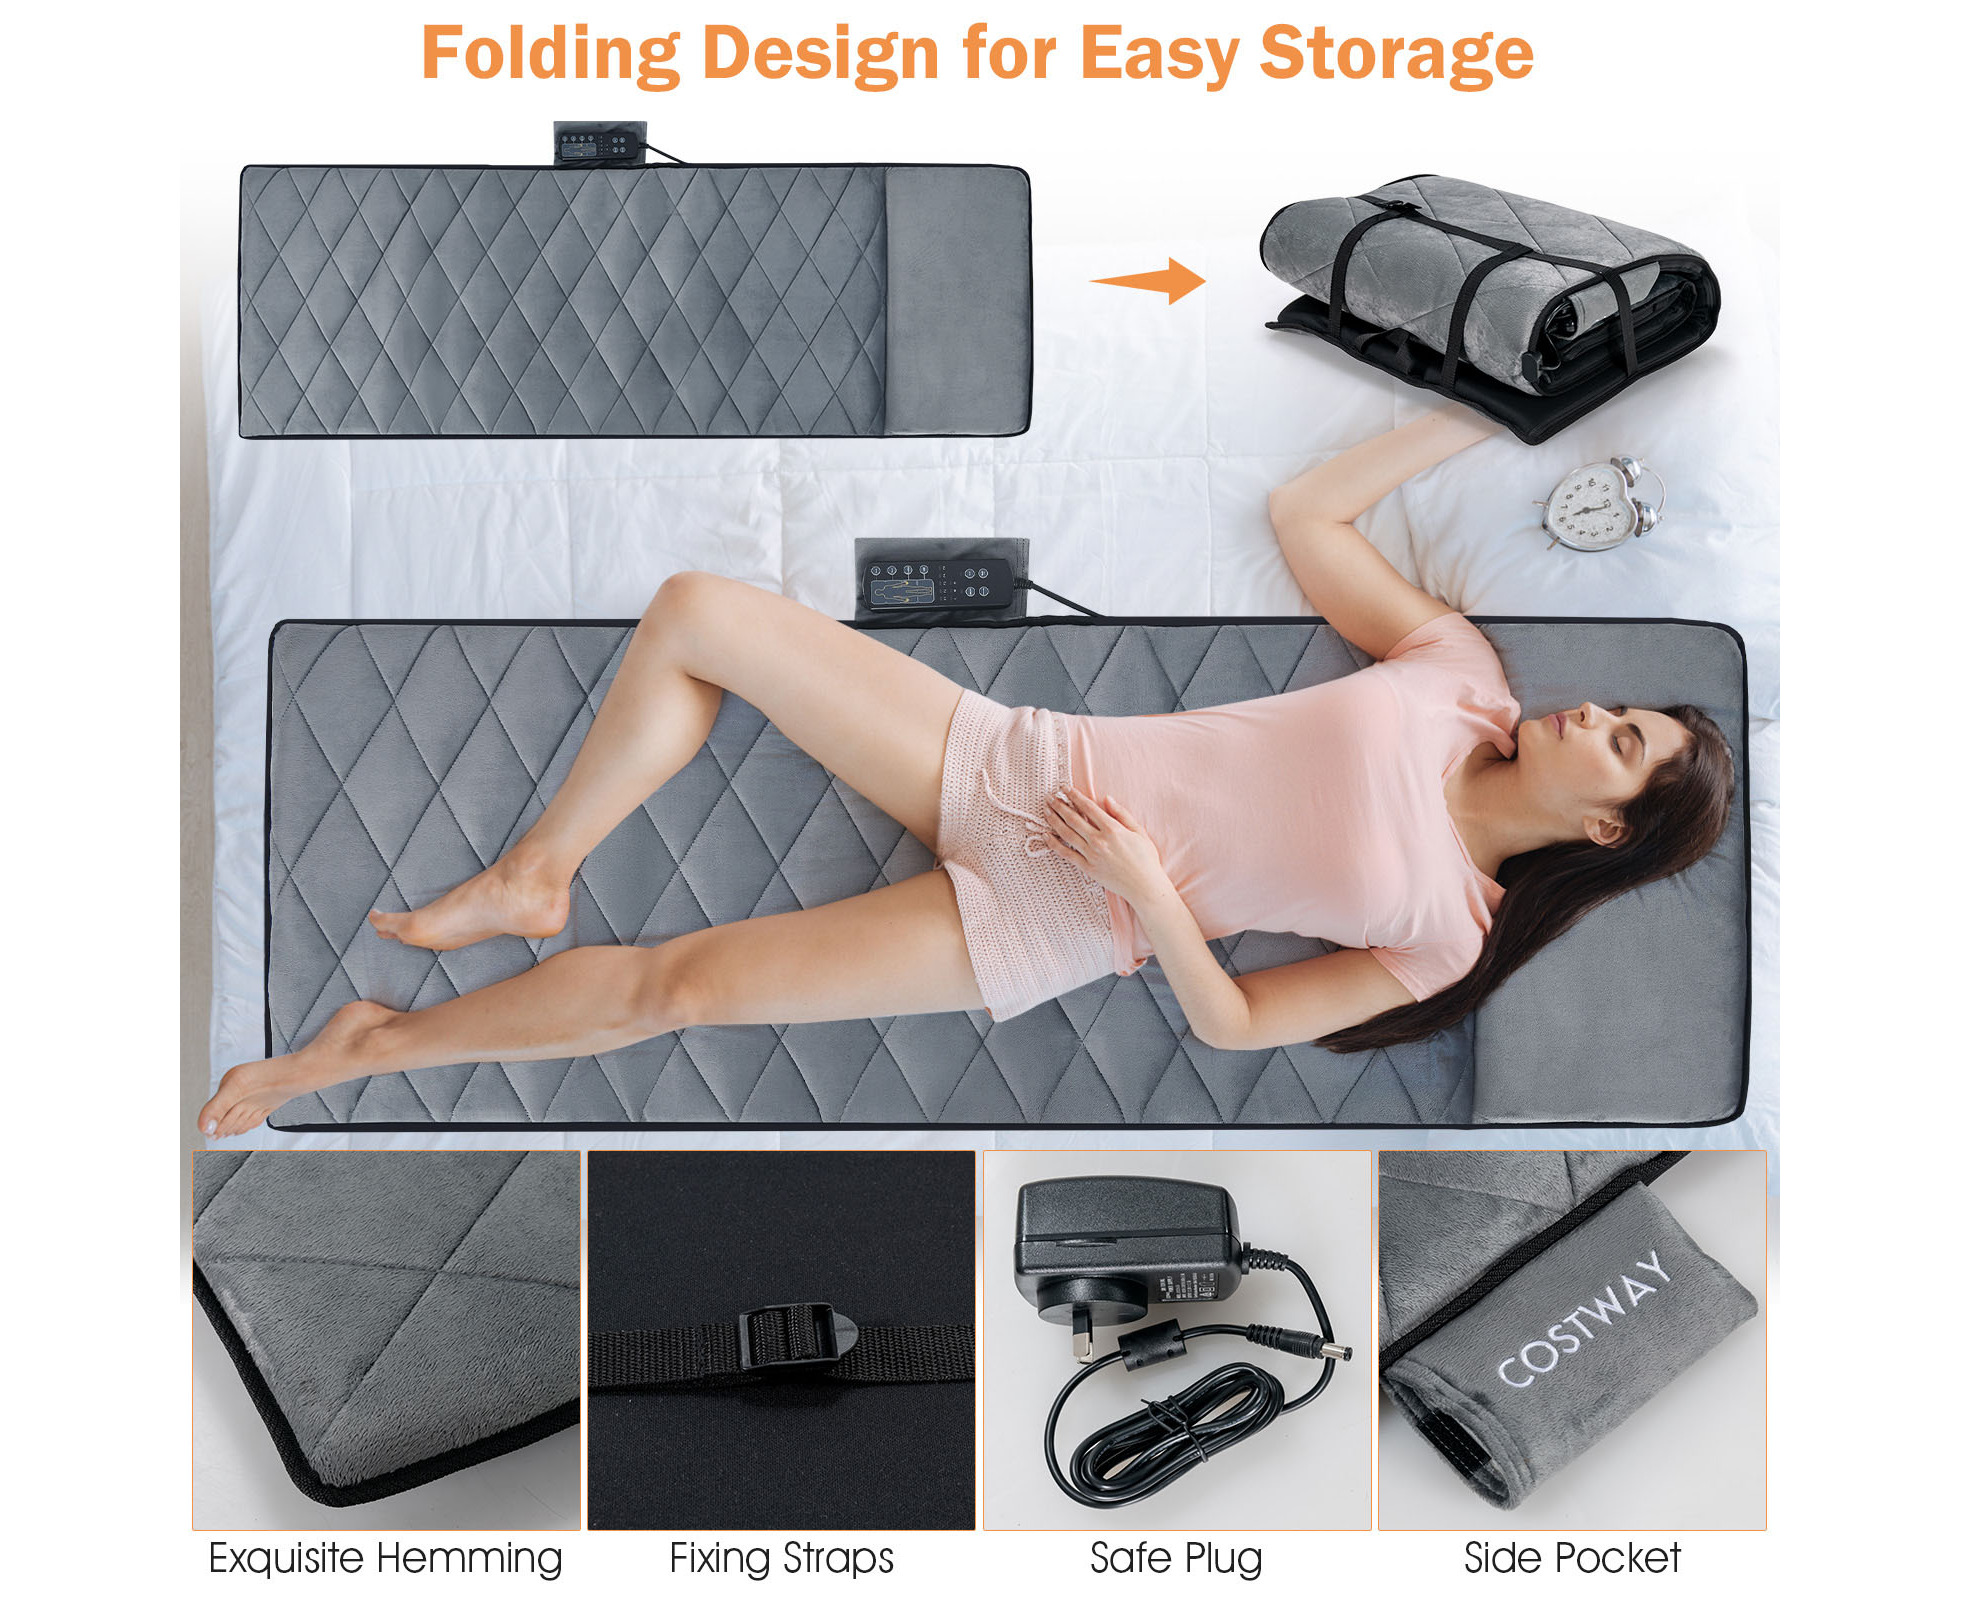 Foldable Massage Mat with Heat and 10 Vibration Motors - Costway